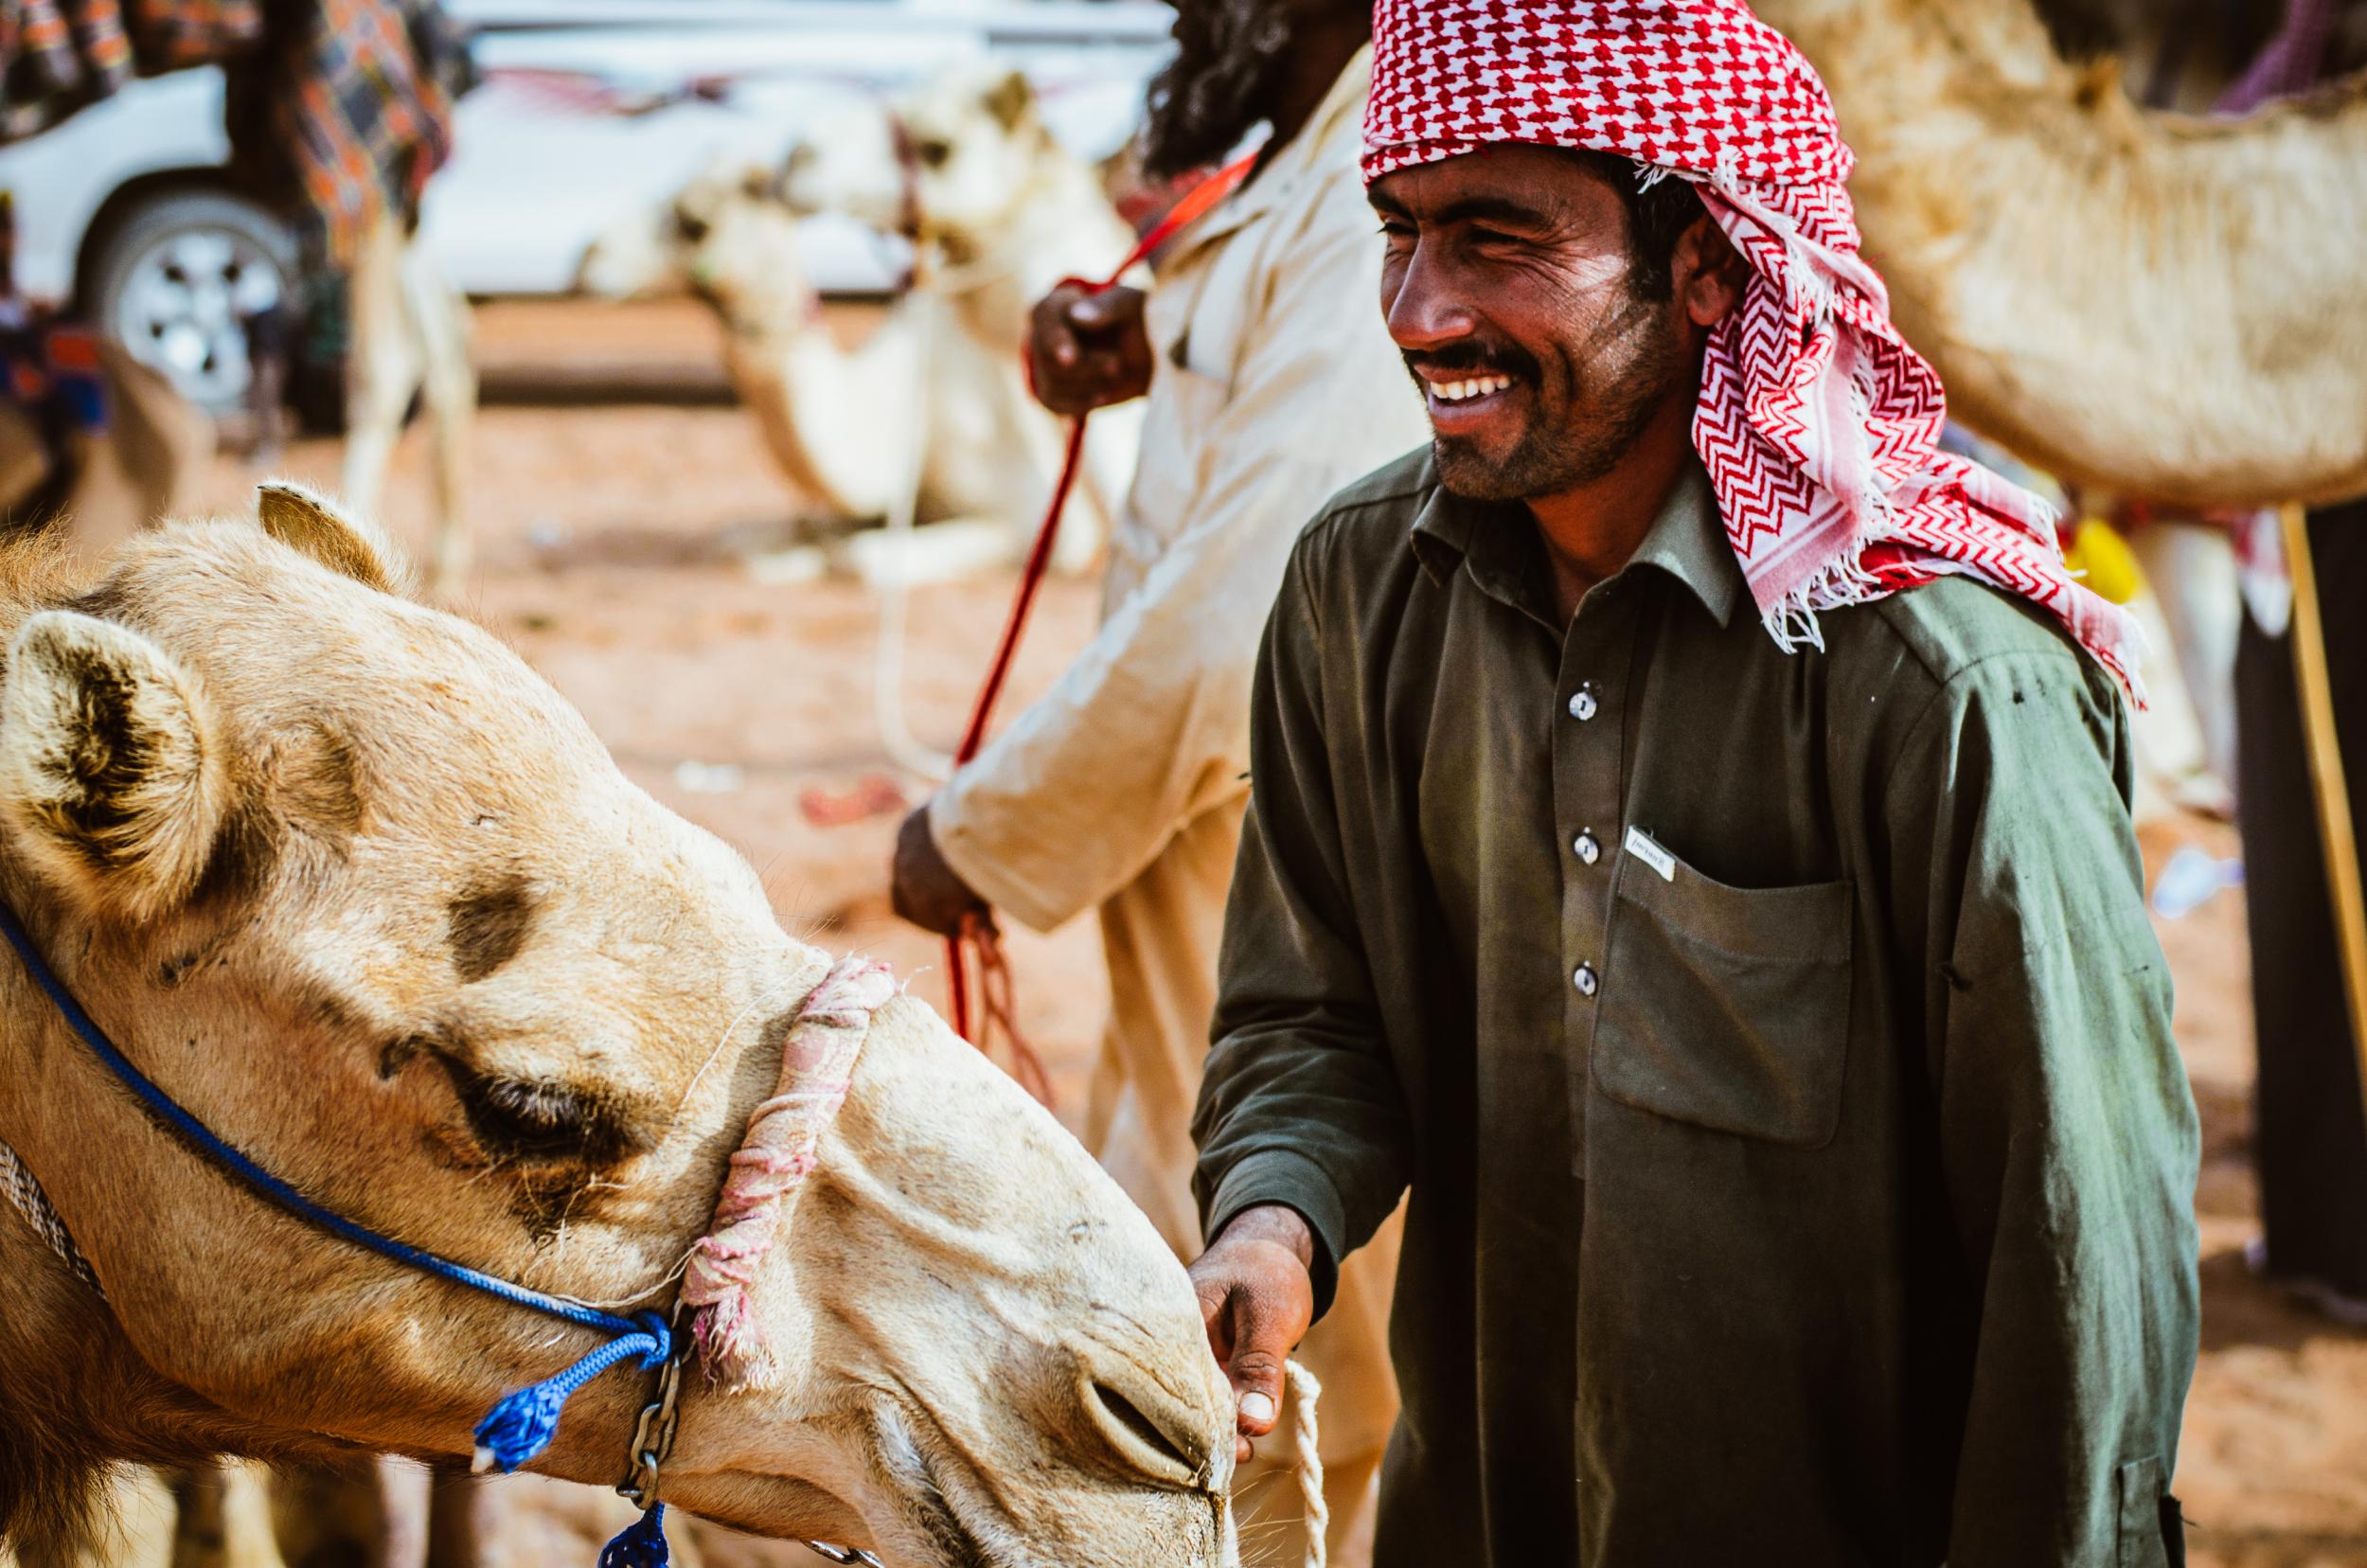 A botox scandal made the camel festival worldwide news